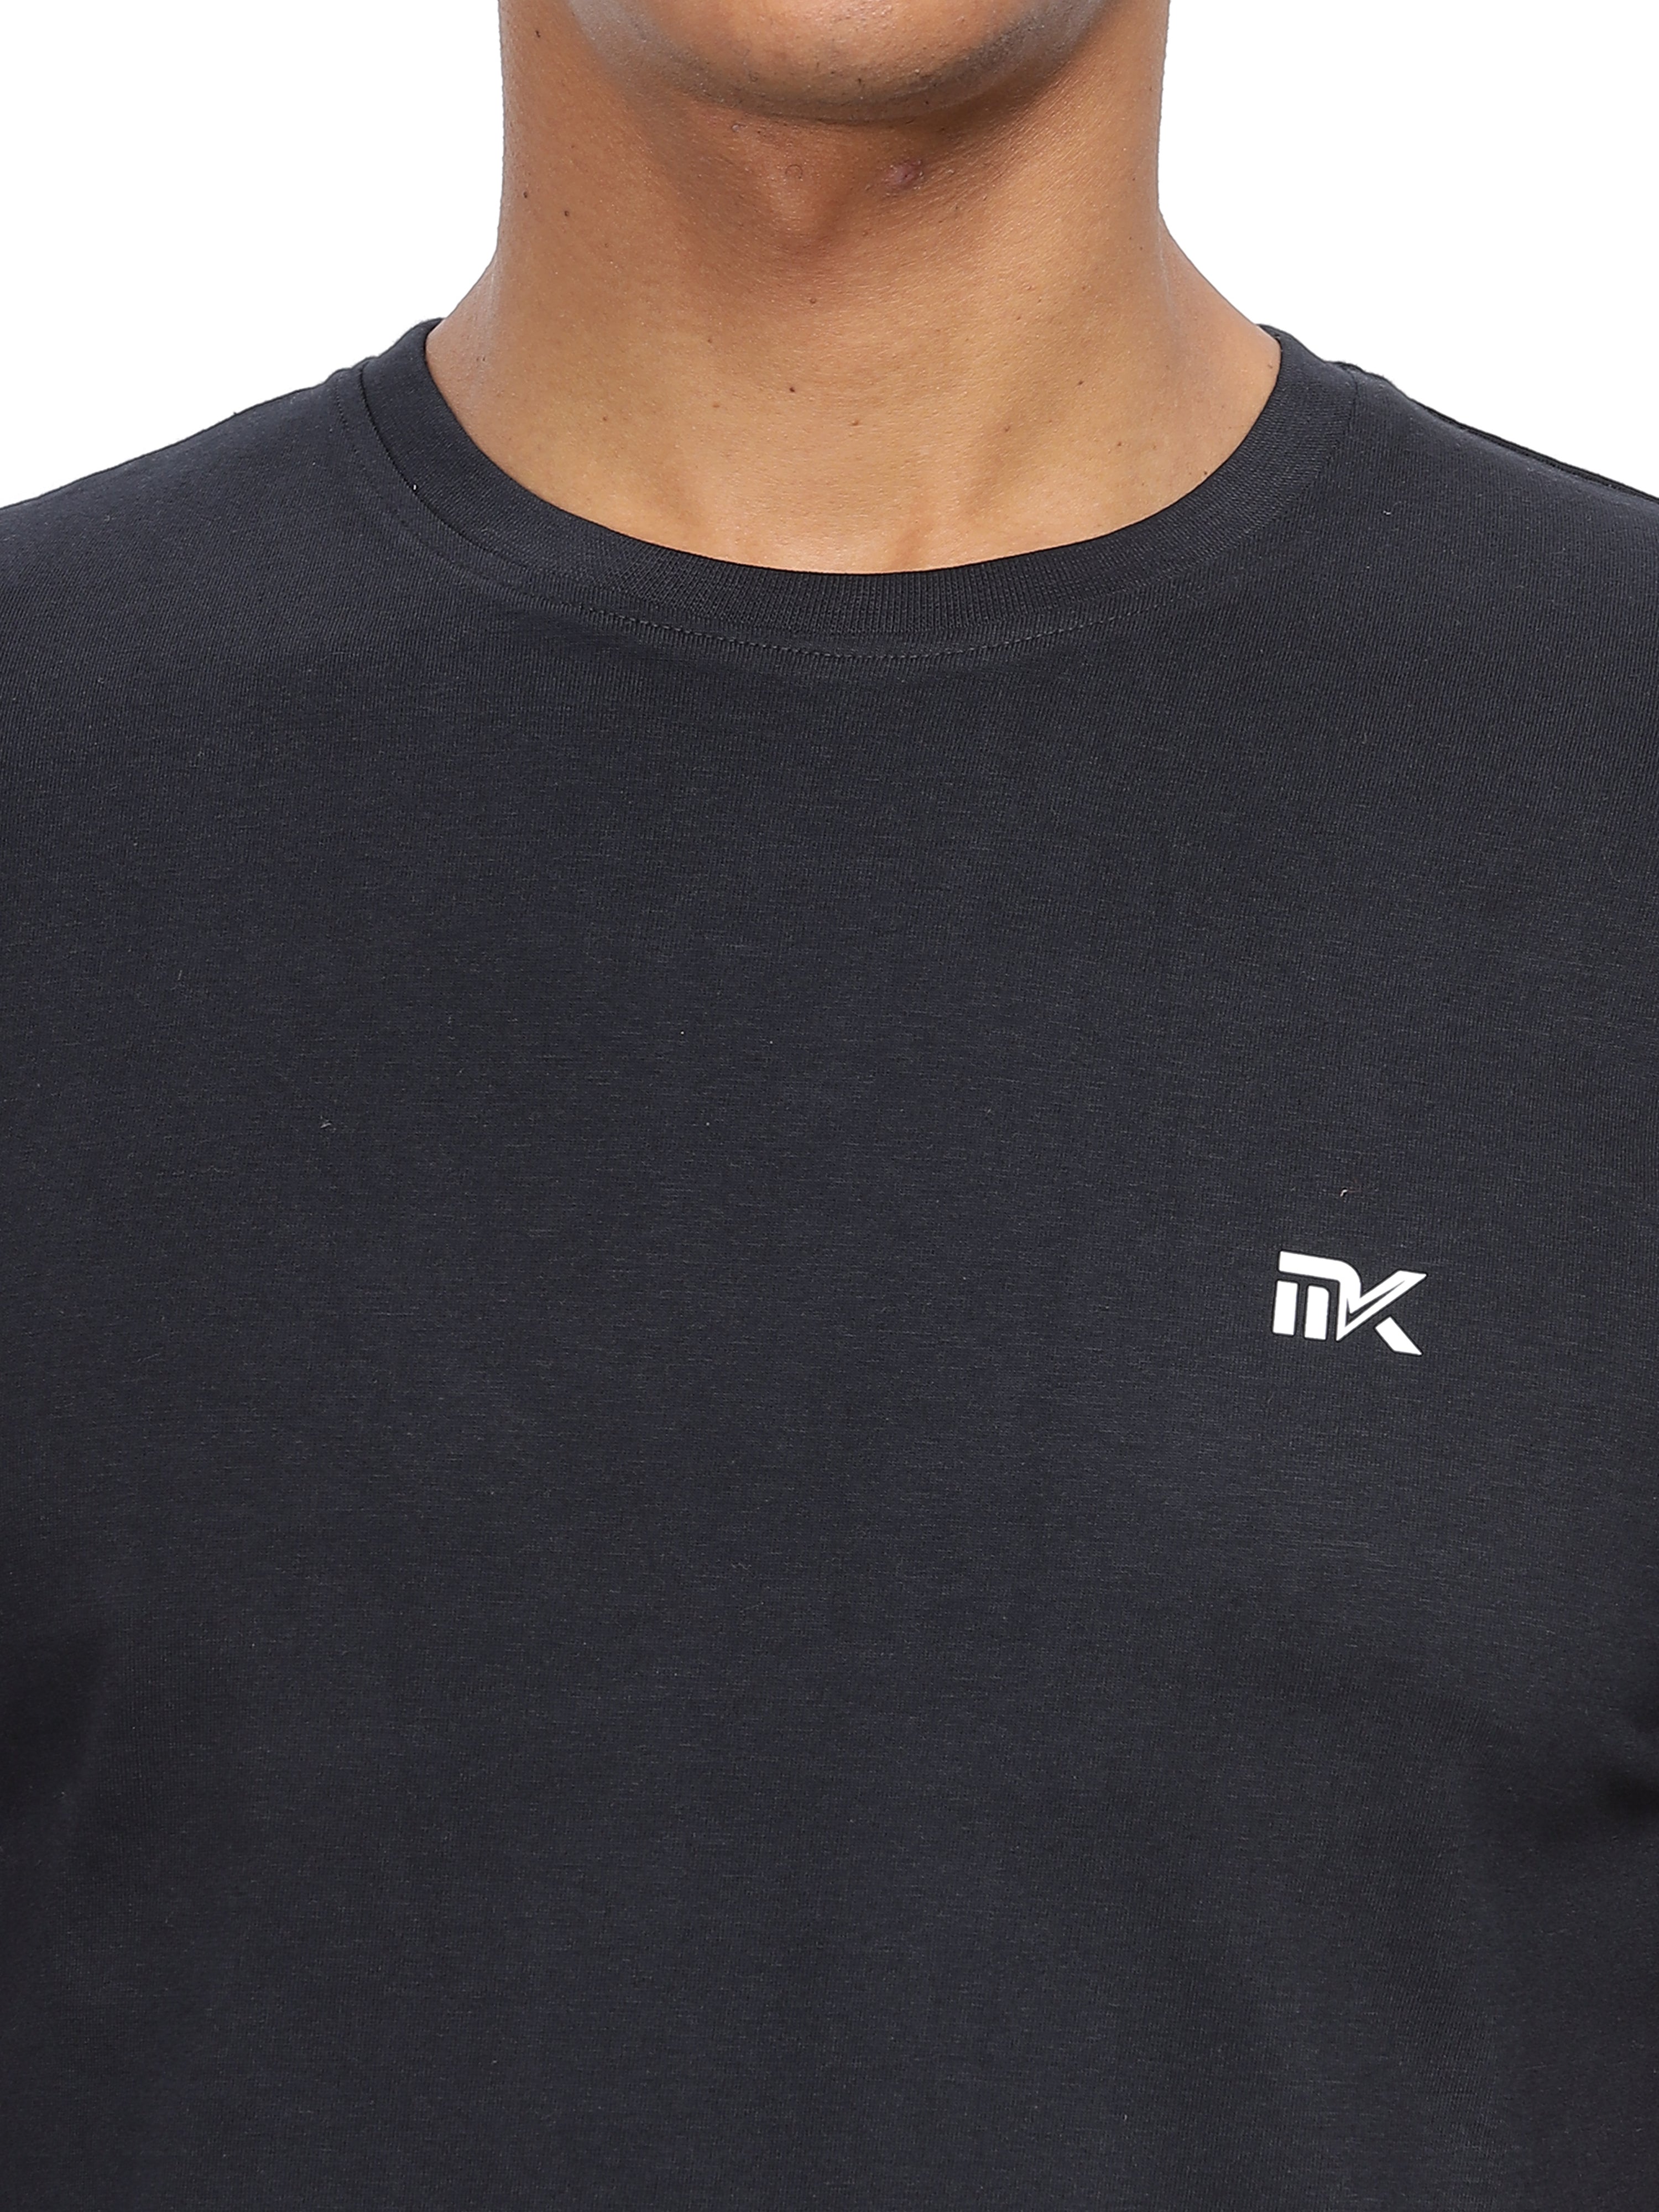 Black Twill Cotton Round Neck T-Shirt Mankright